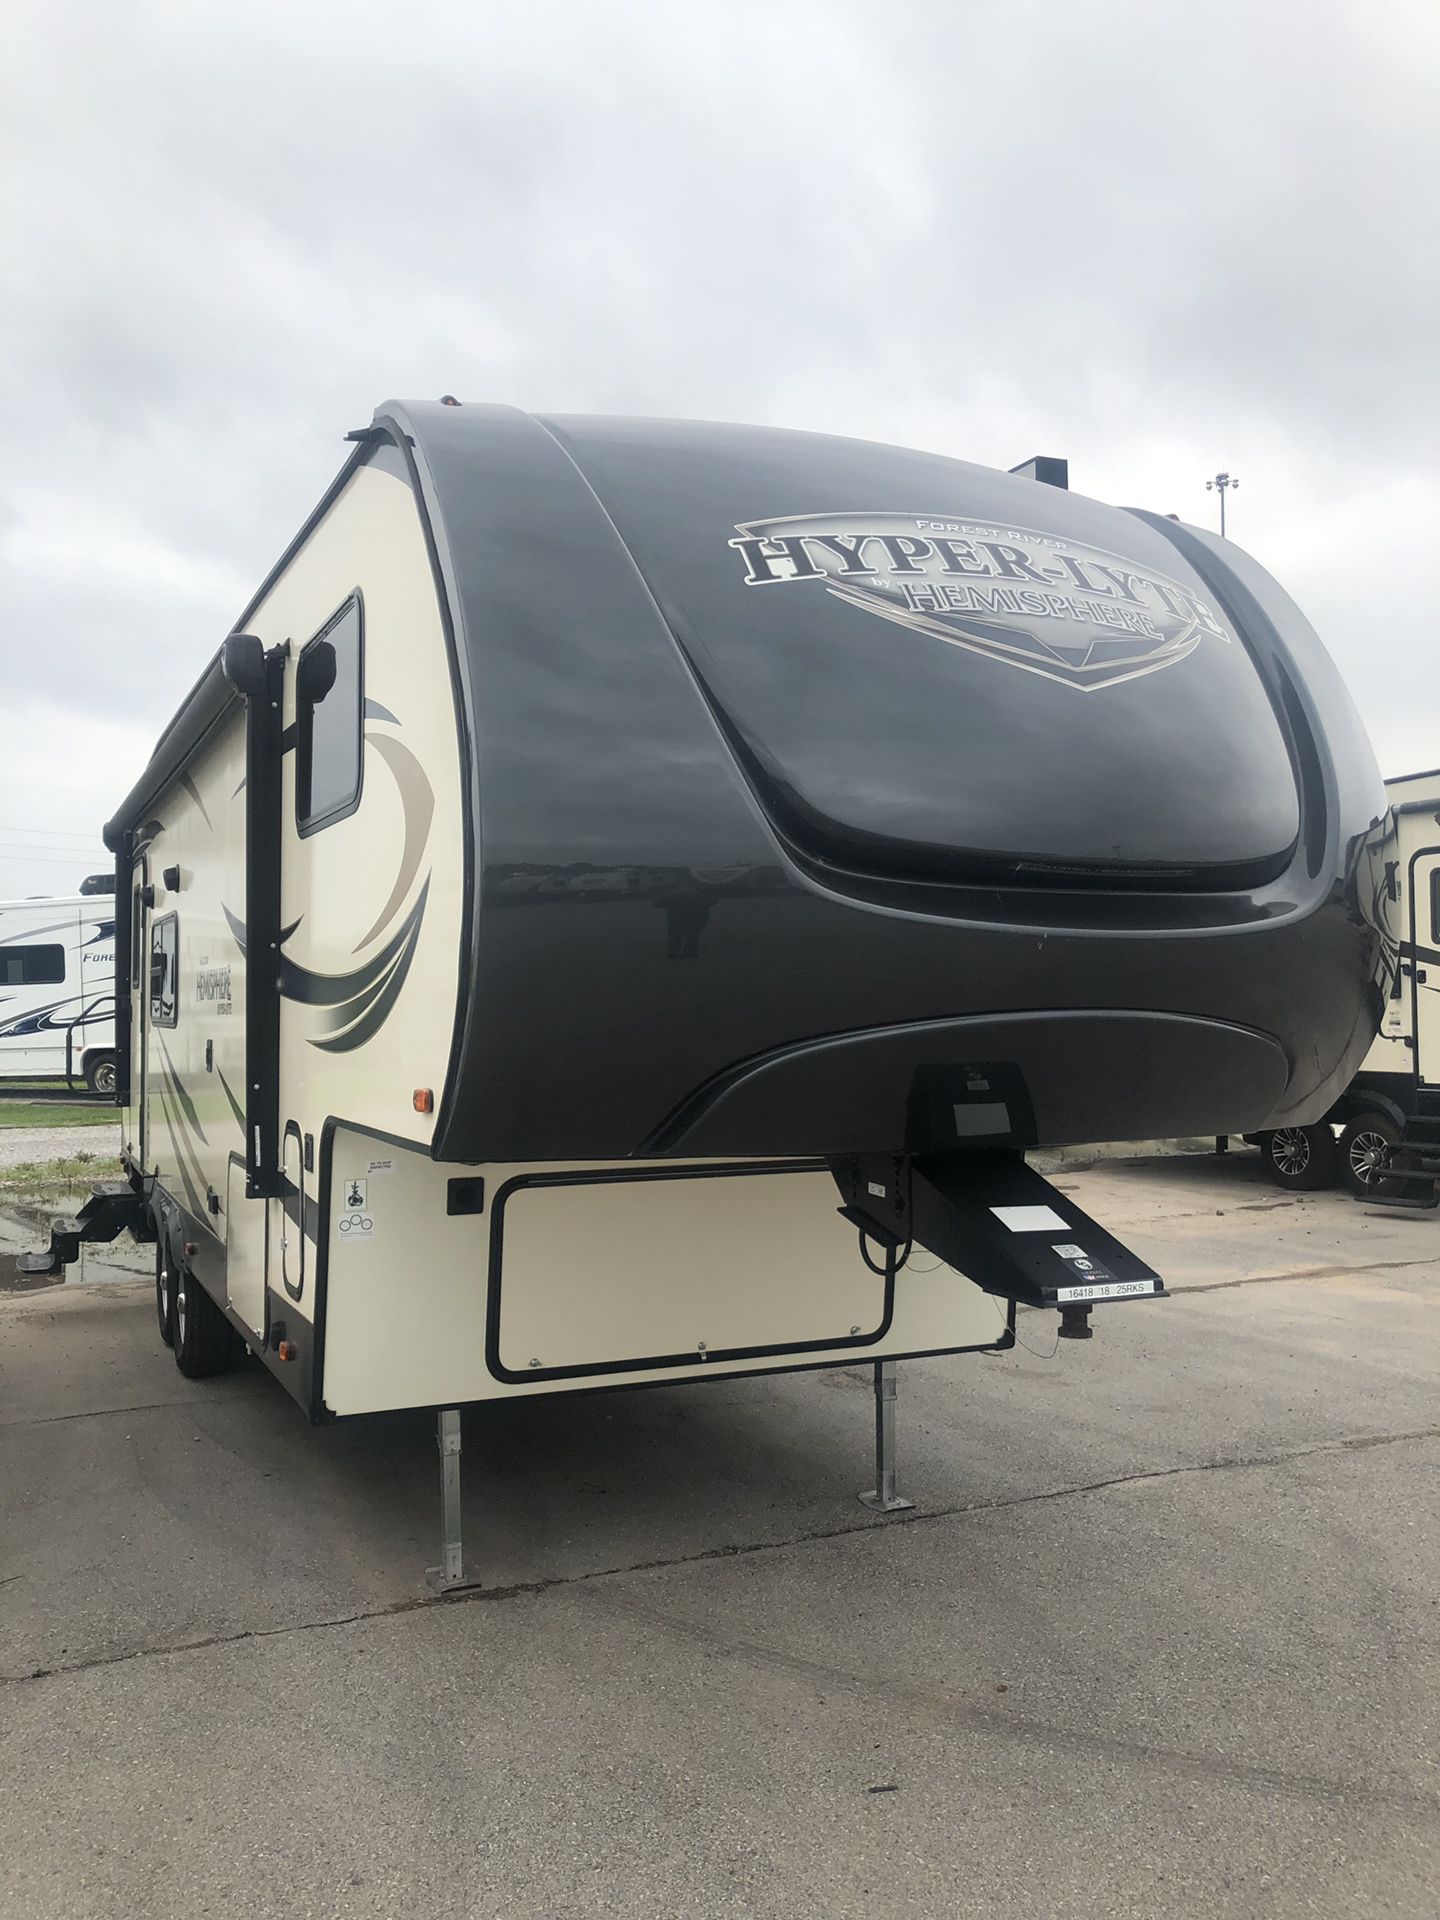 2018 Salem Hemisphere lite 25RKS camper RV 5th wheel trailer